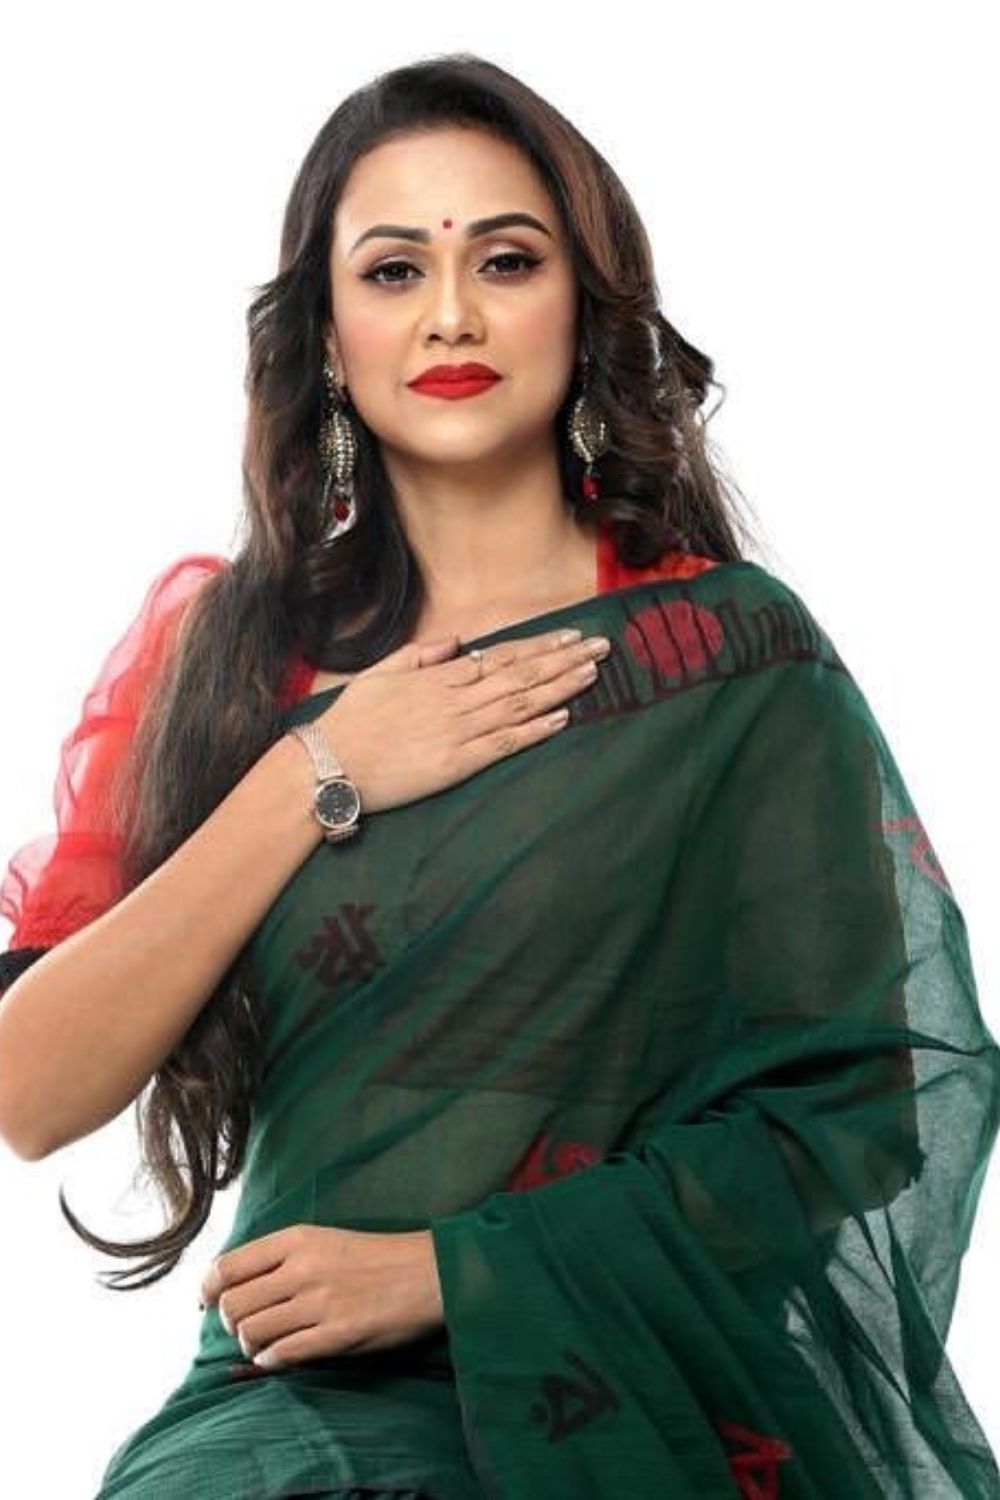  celebrity of bangladesh